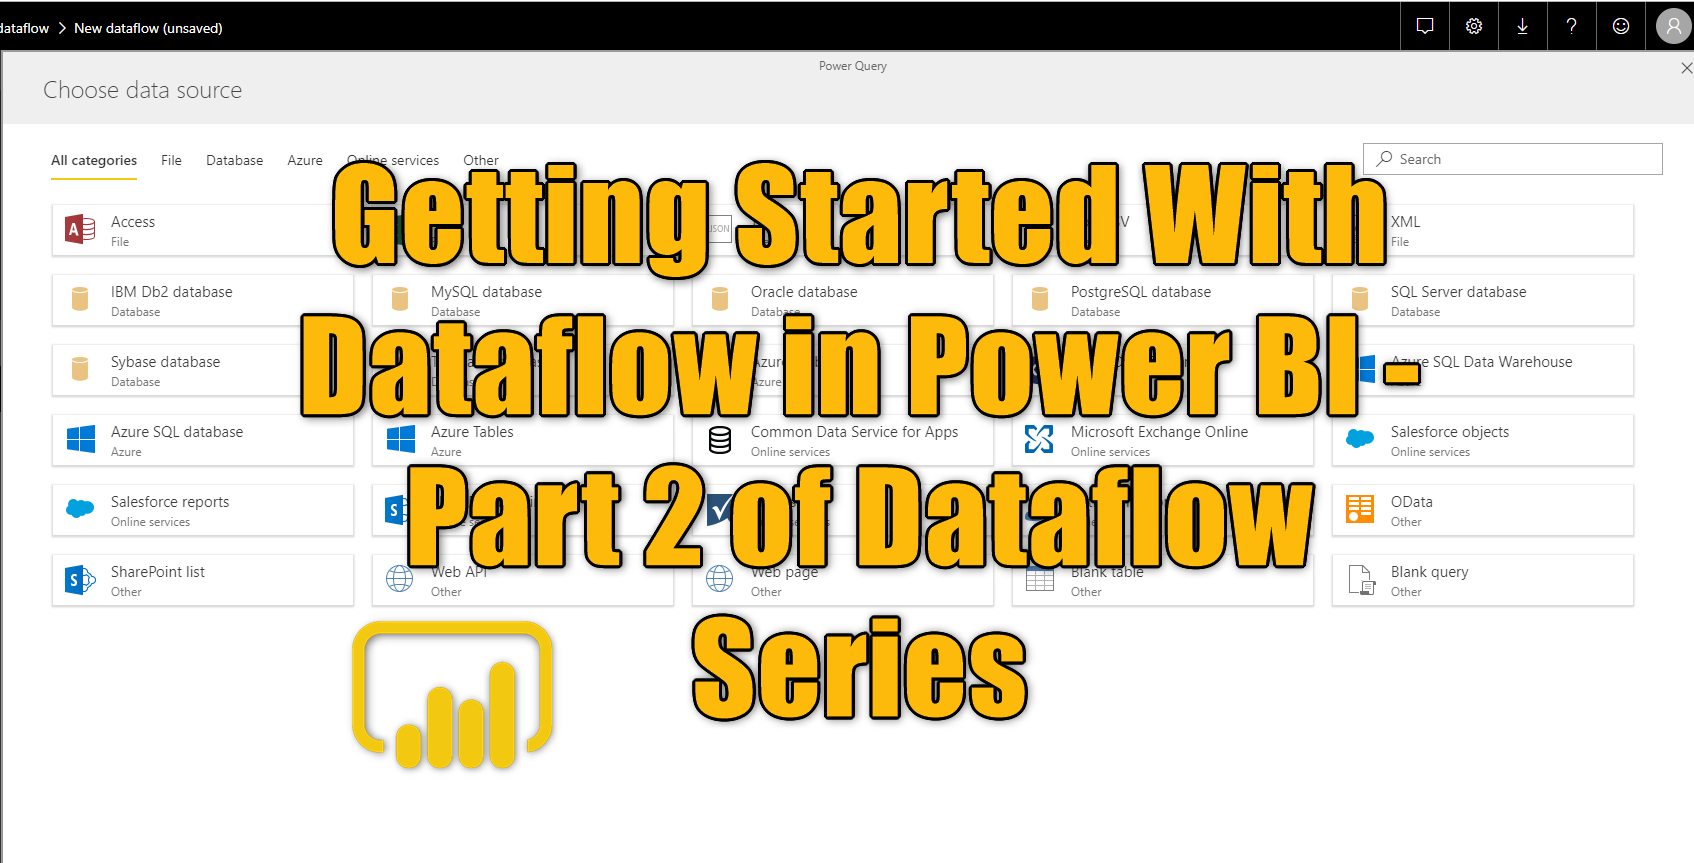 Getting Started With Dataflow in Power BI – Part 2 of Dataflow Series